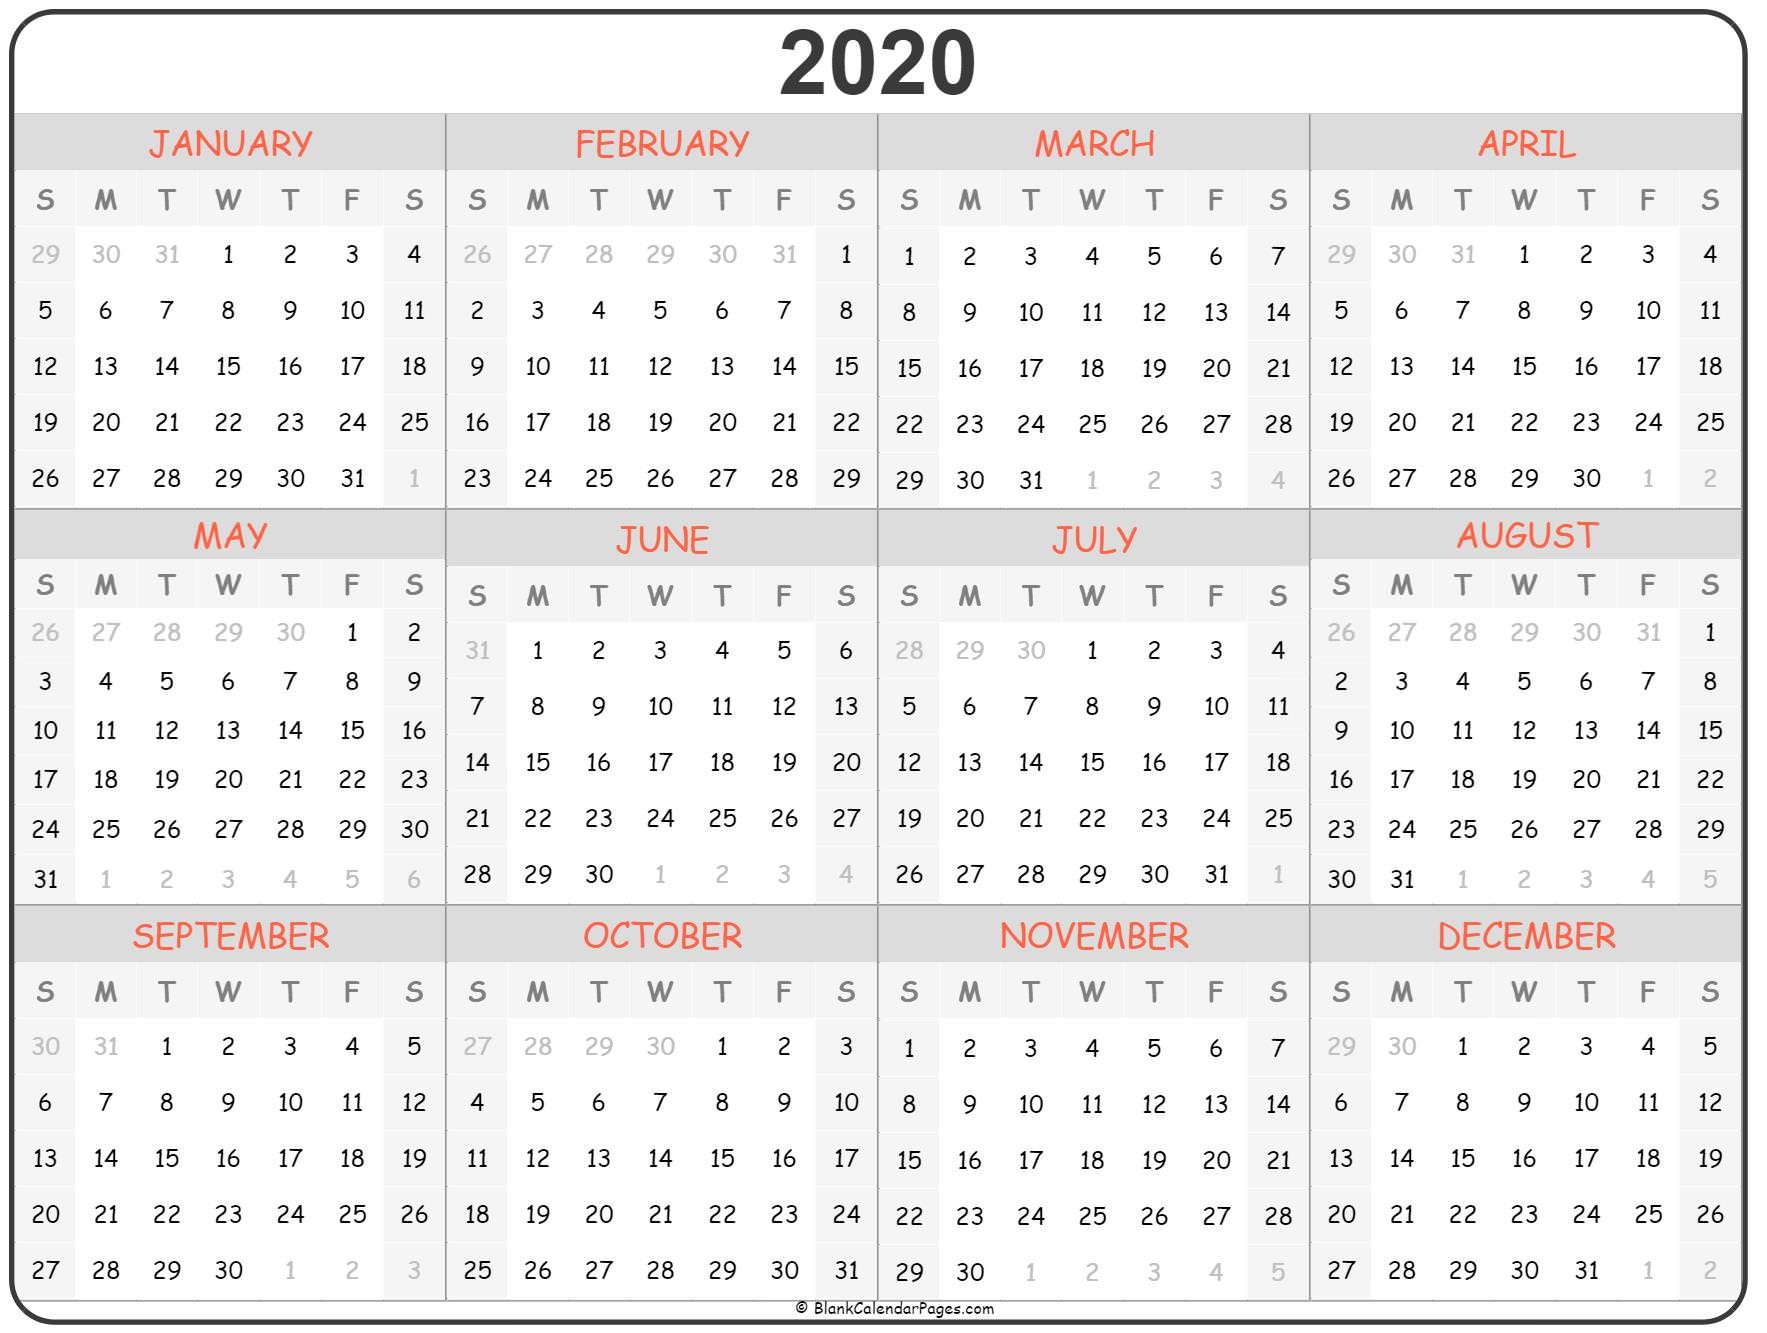 2020 year calendar